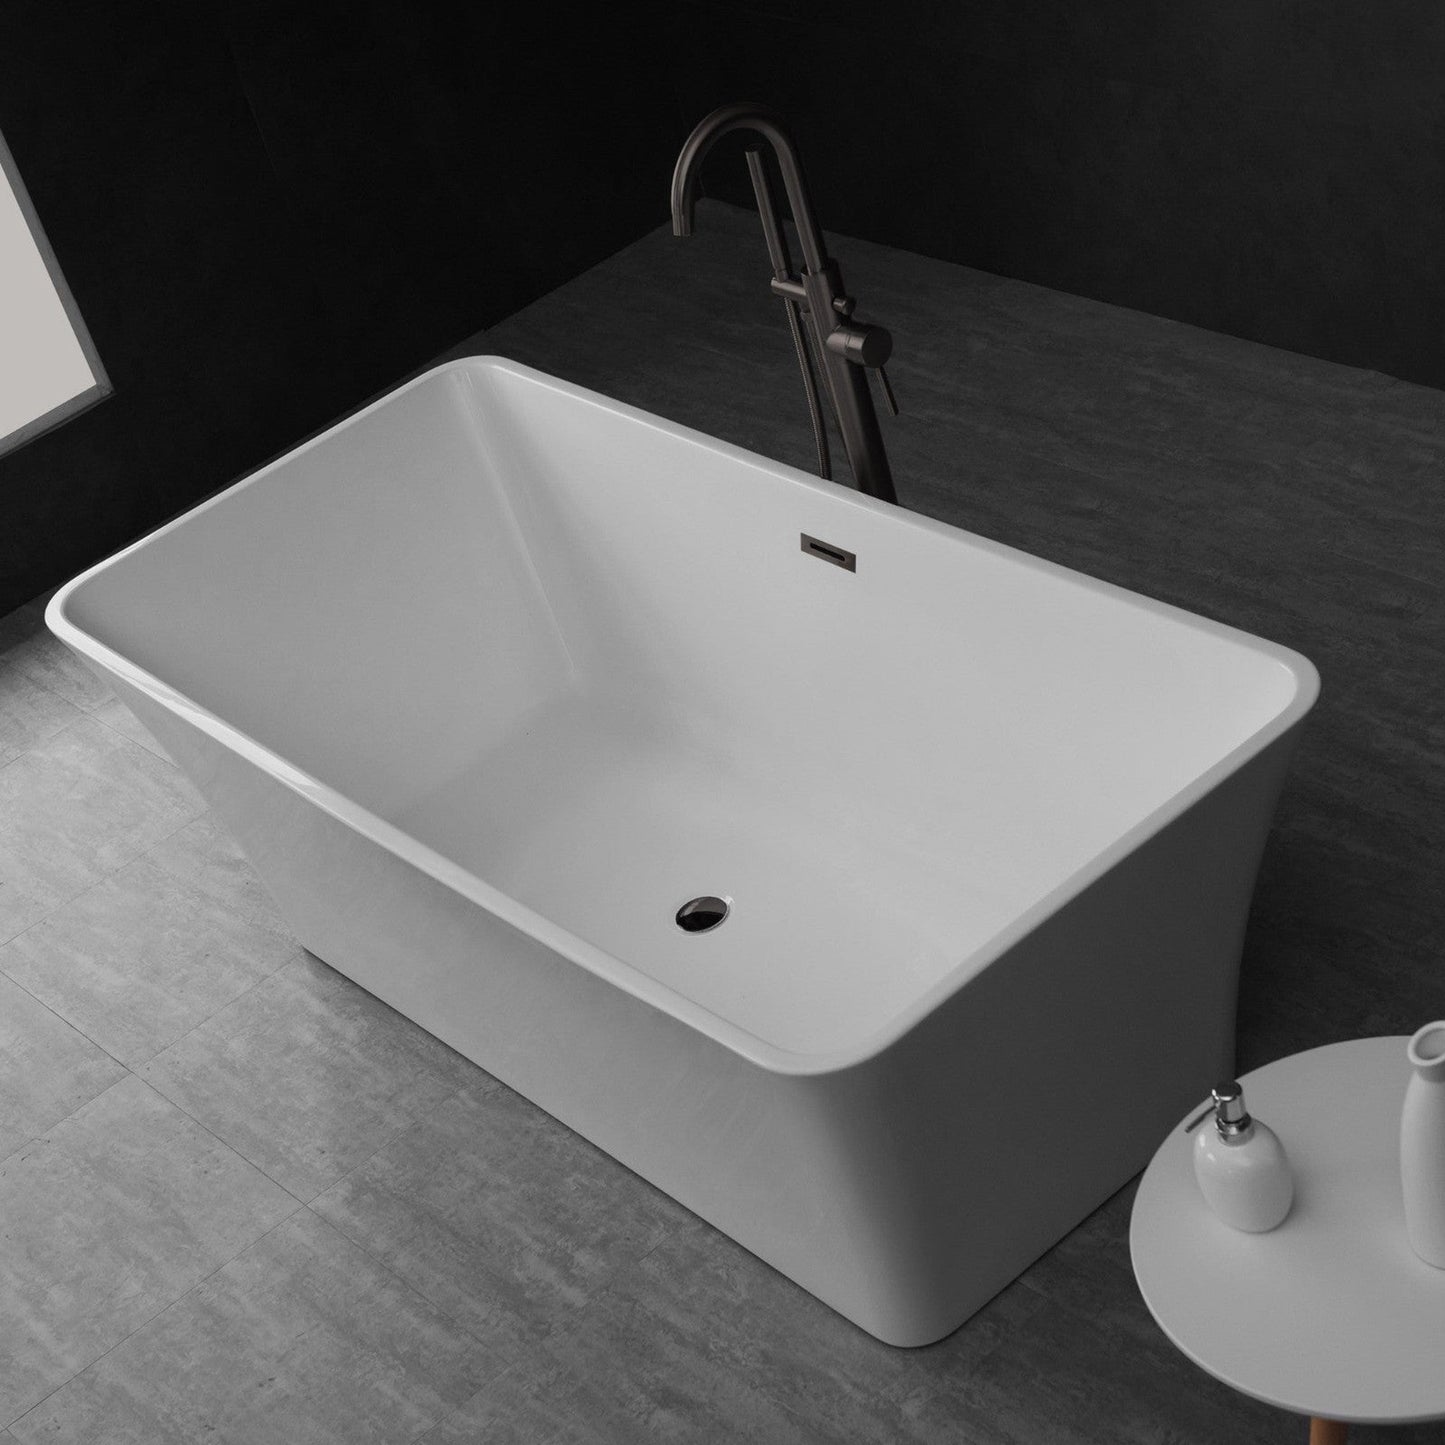 WoodBridge B0004 67" White Acrylic Freestanding Soaking Bathtub With Matte Black Drain, Overflow, F0072MBVT Tub Filler and Caddy Tray